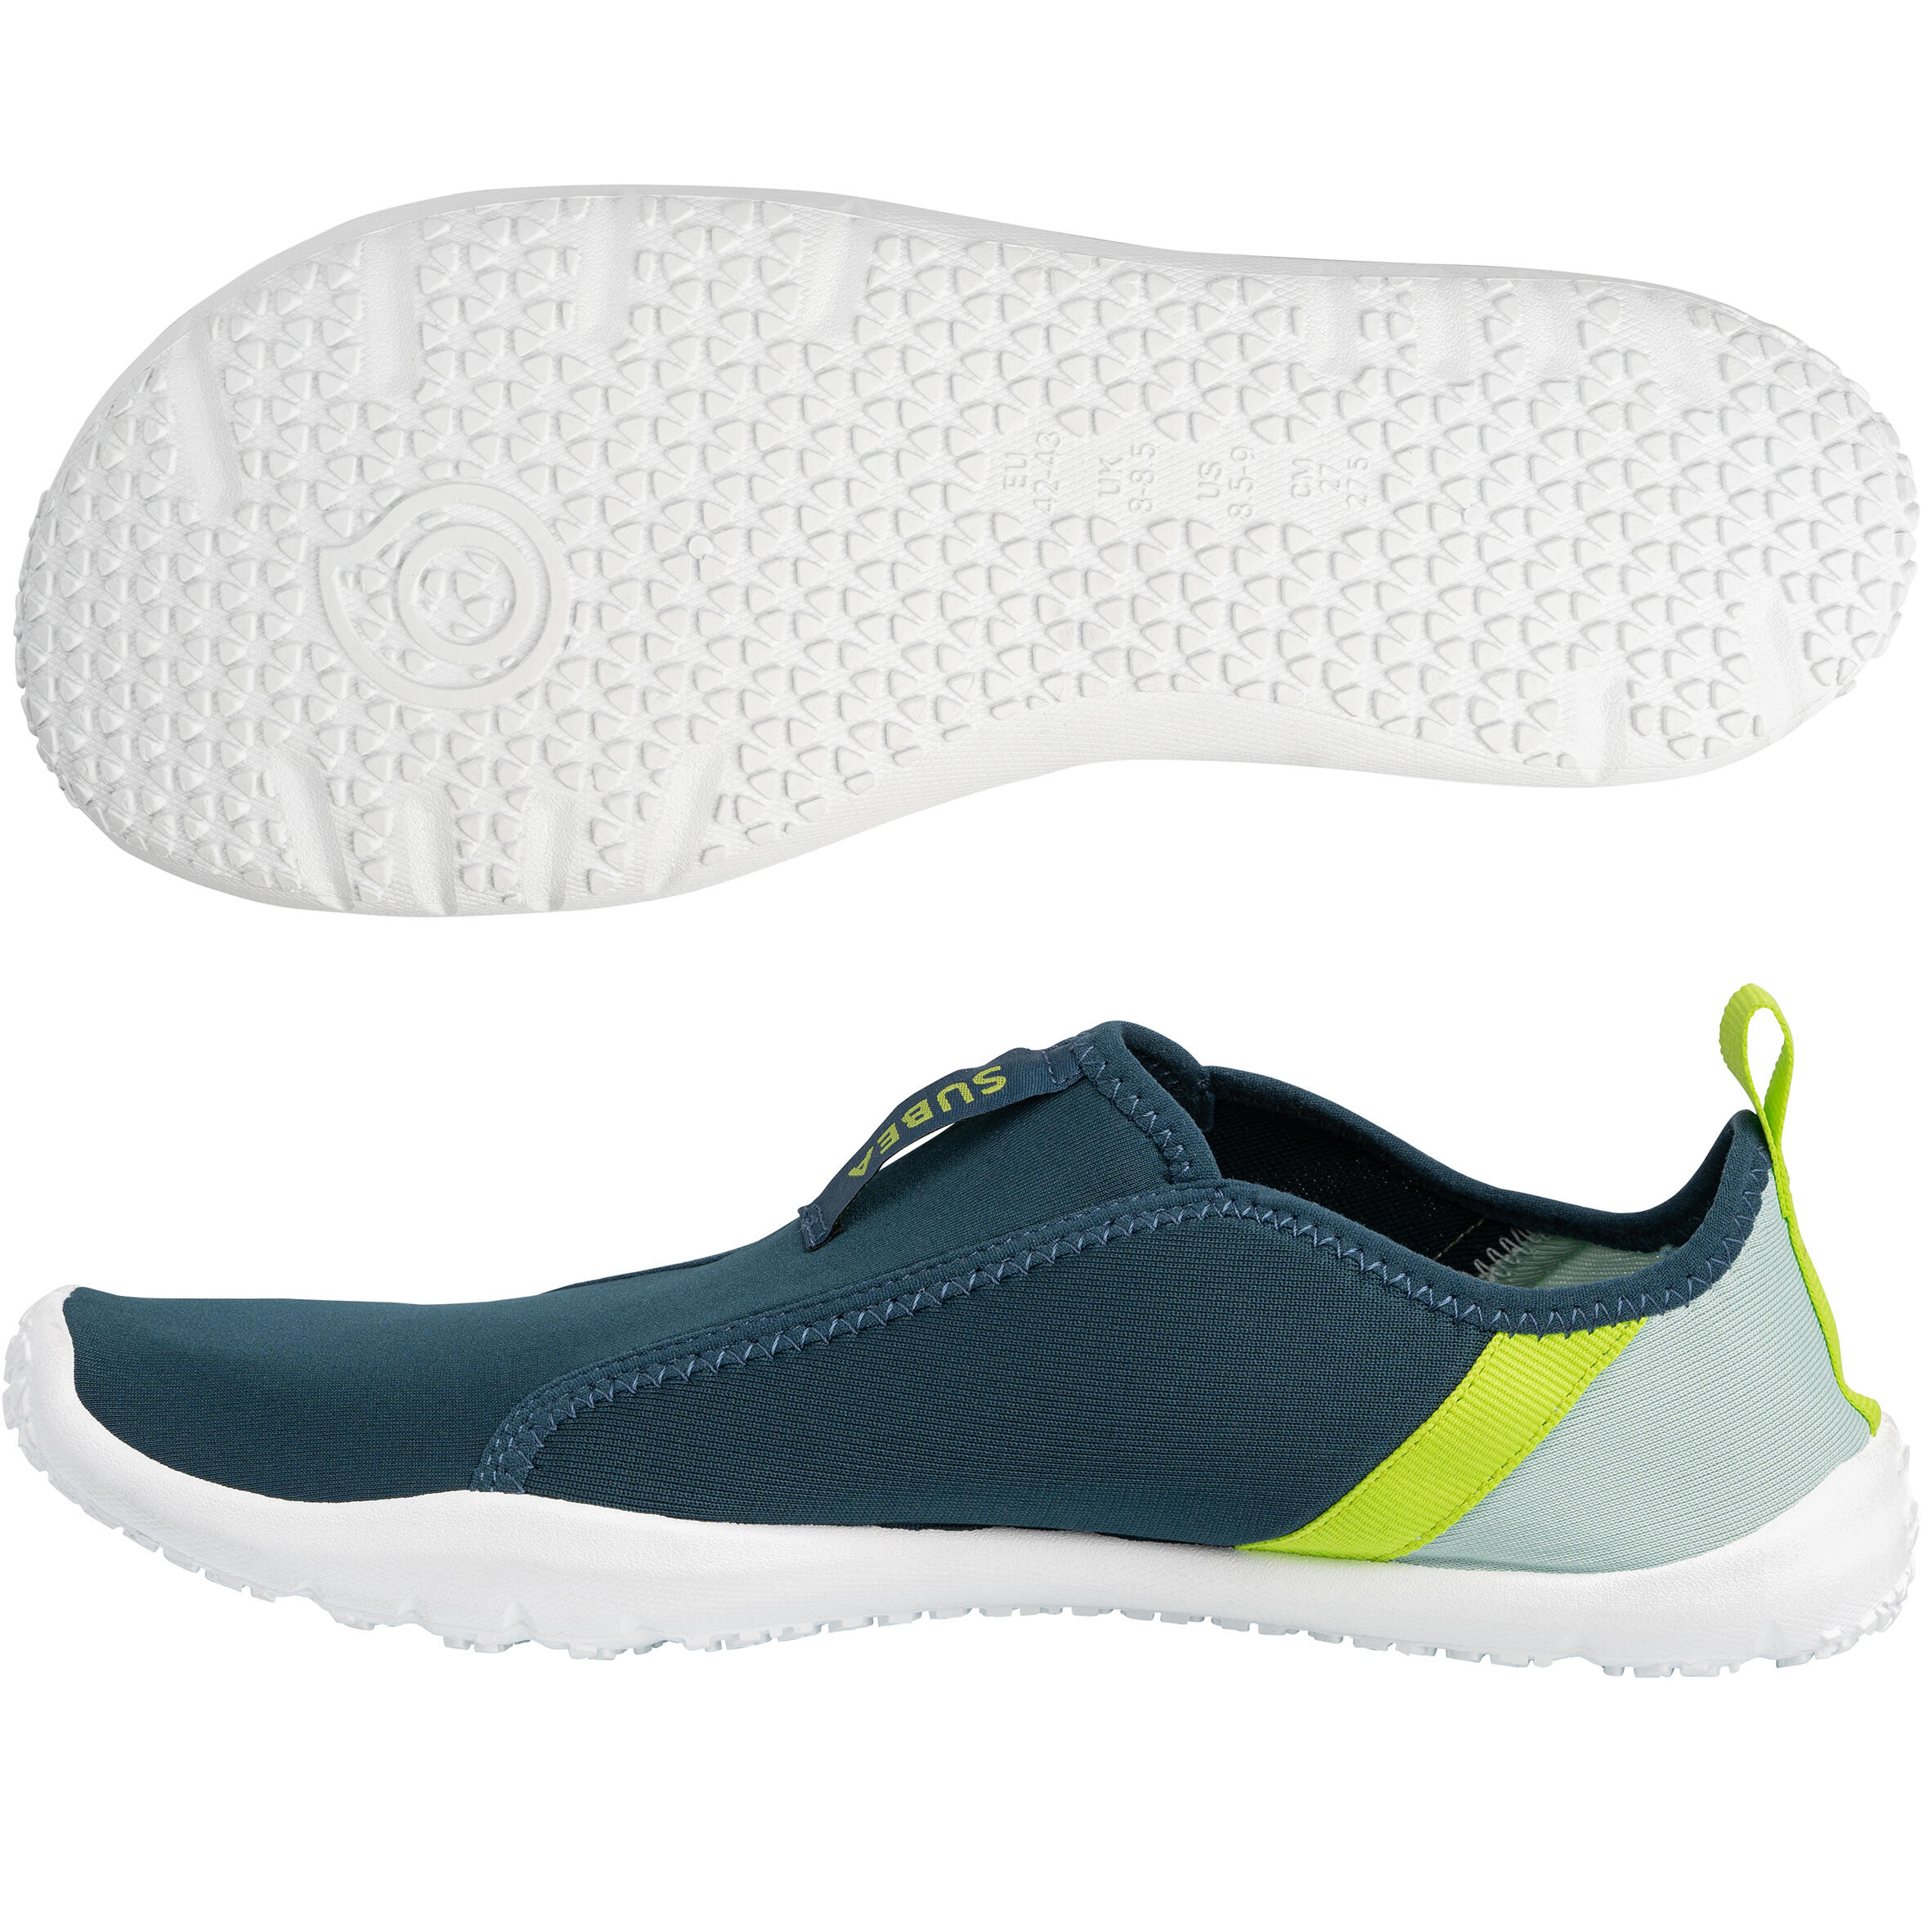 Water Shoes - 120 - Dark petrol blue, Green, Lime green - Subea - Decathlon